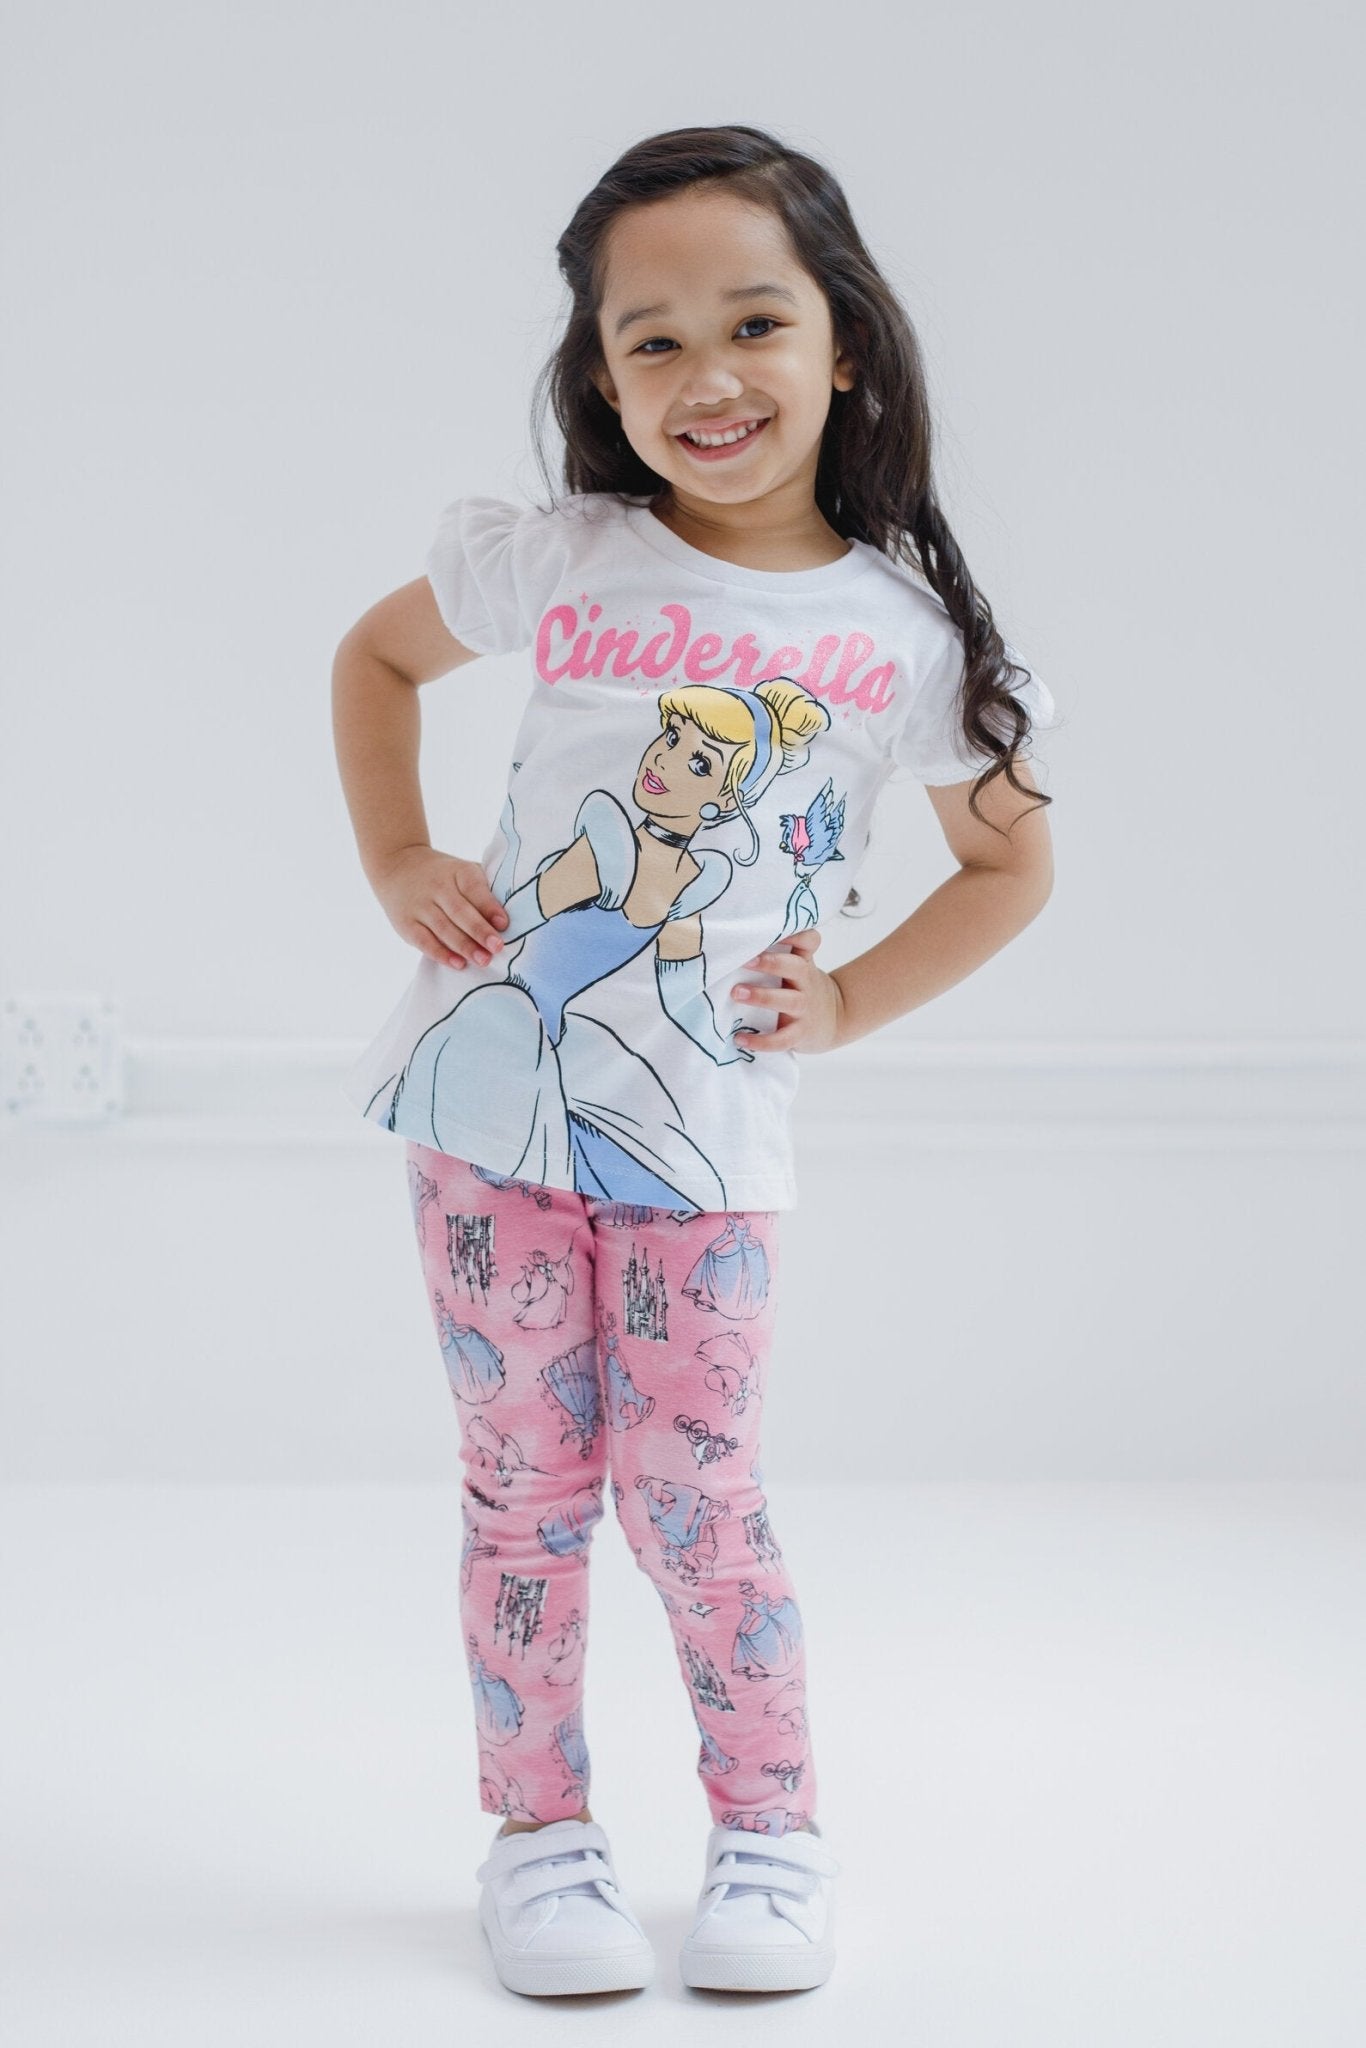 Disney Princess Princess Cinderella T-Shirt and Capri Leggings Outfit Set - imagikids